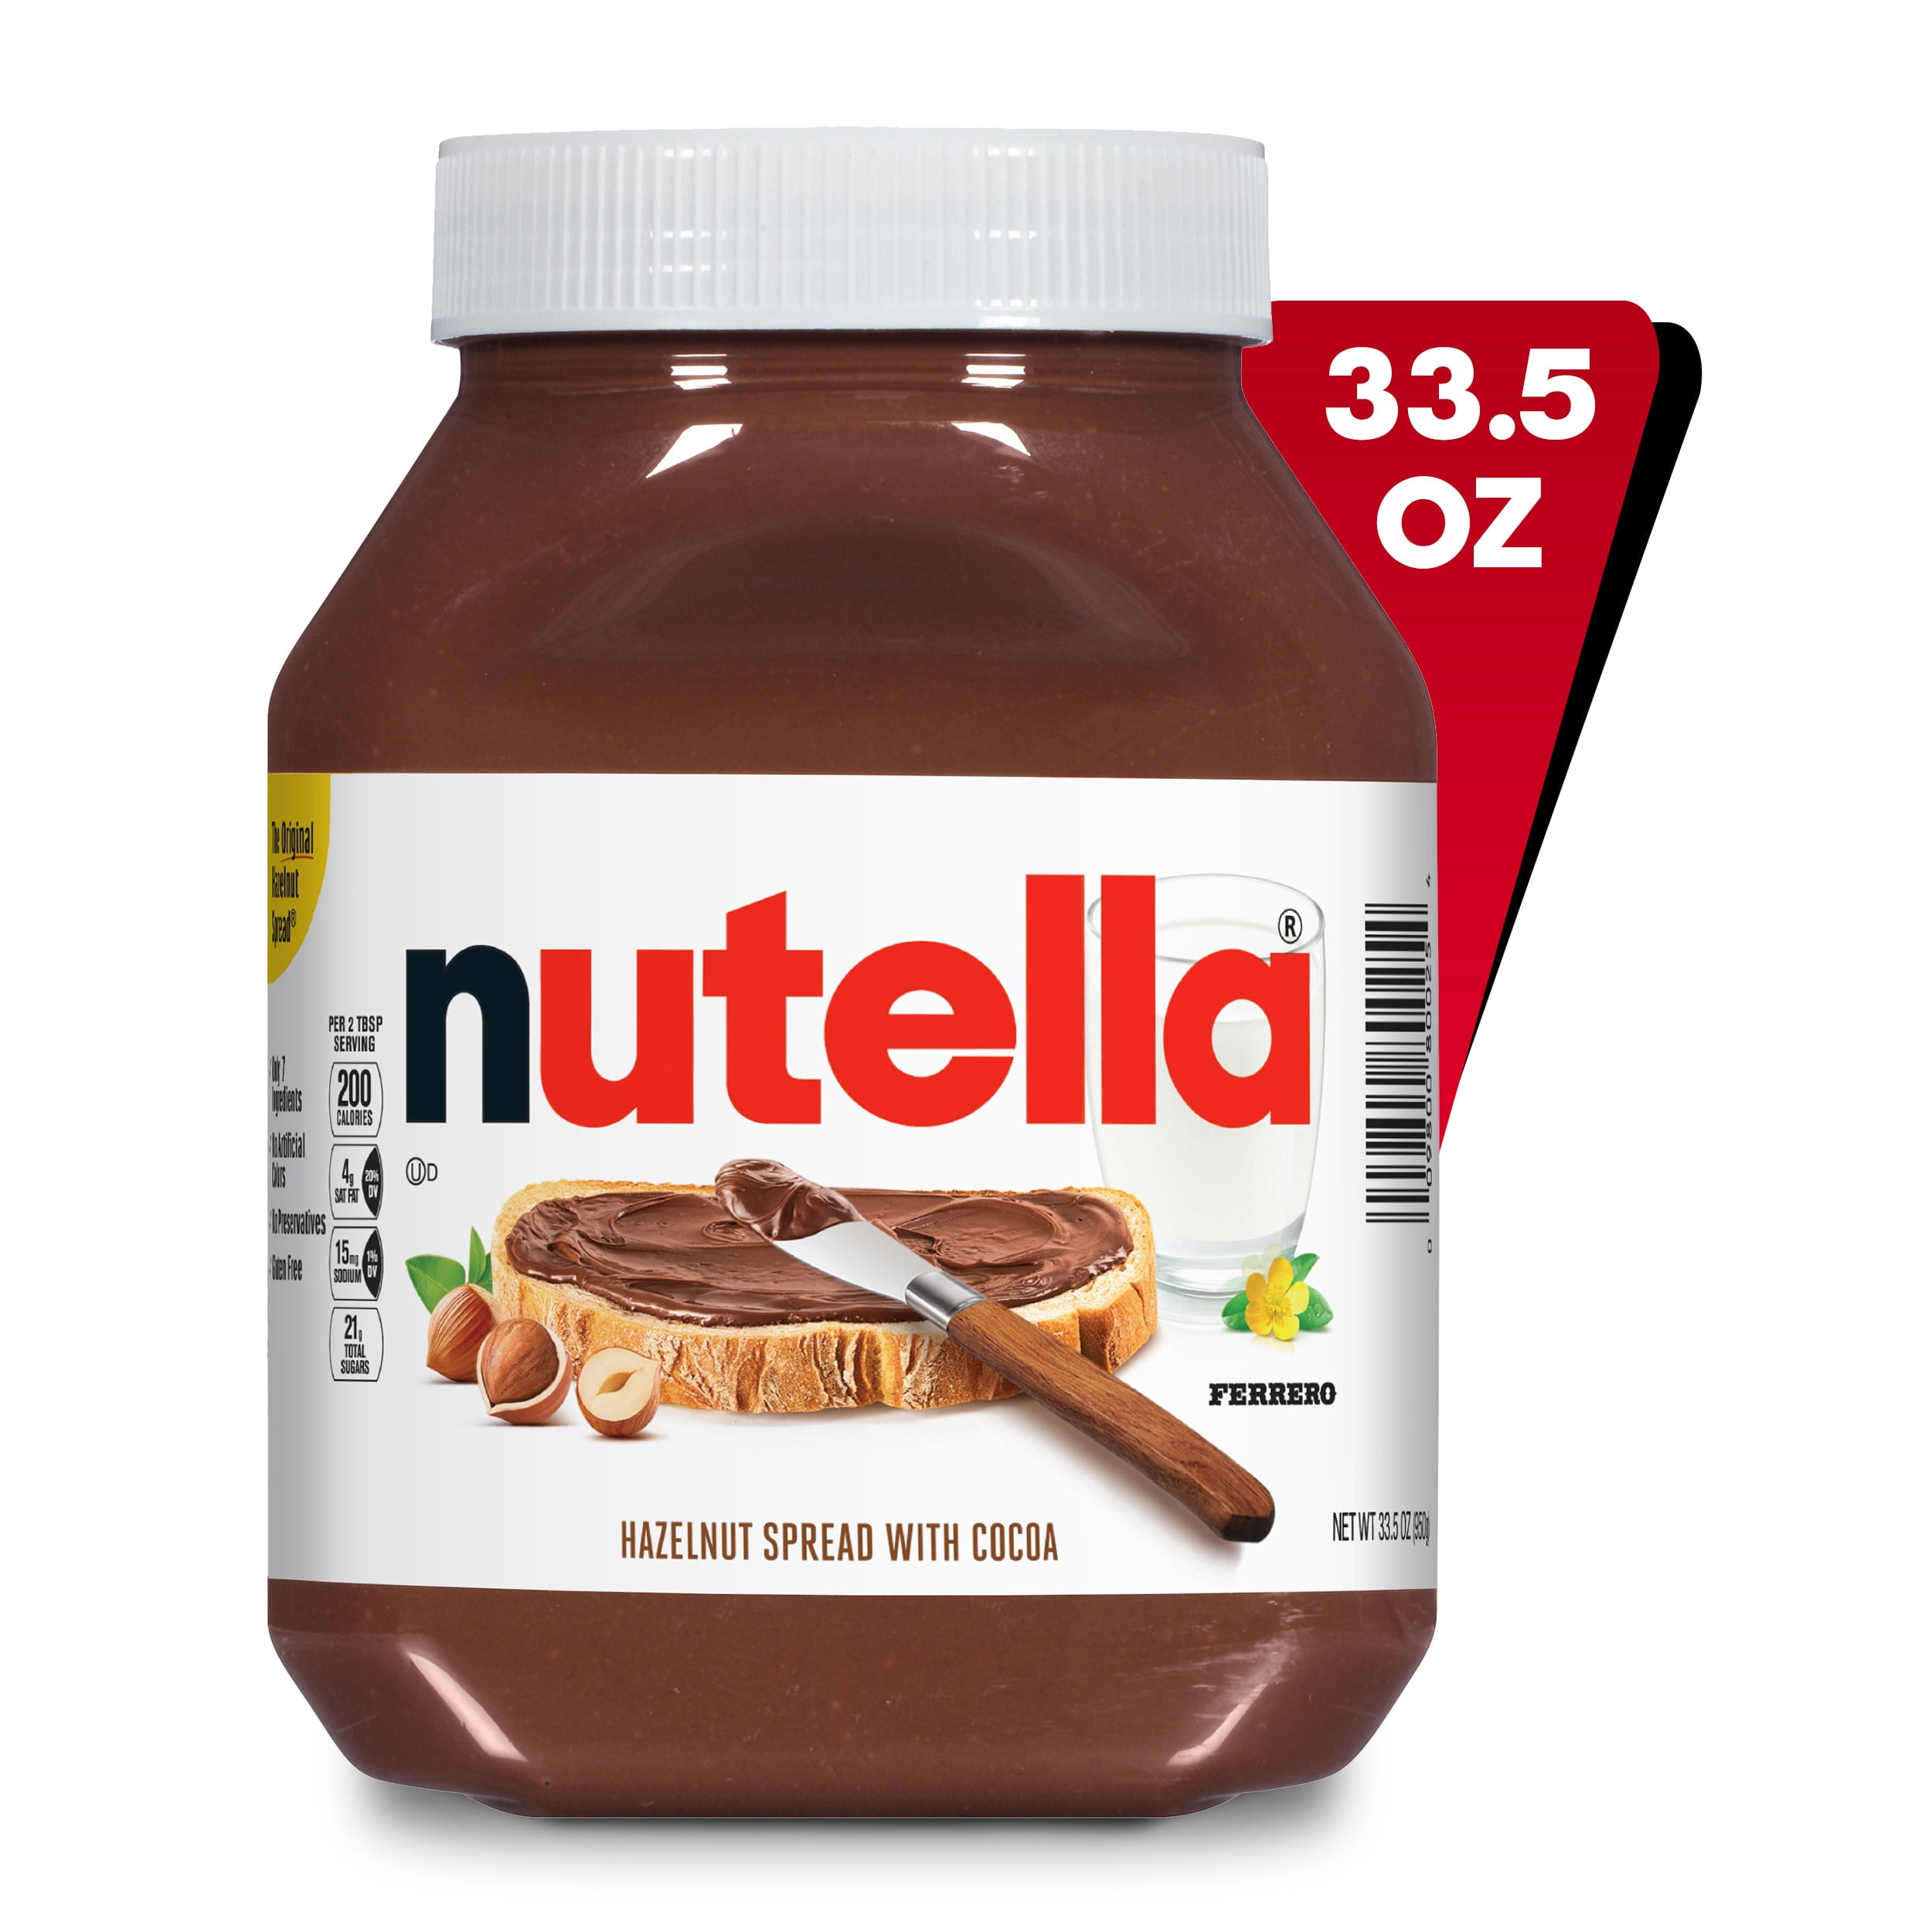 Nutella Hazelnut Spread with Cocoa for Breakfast, 33.5 oz Jar